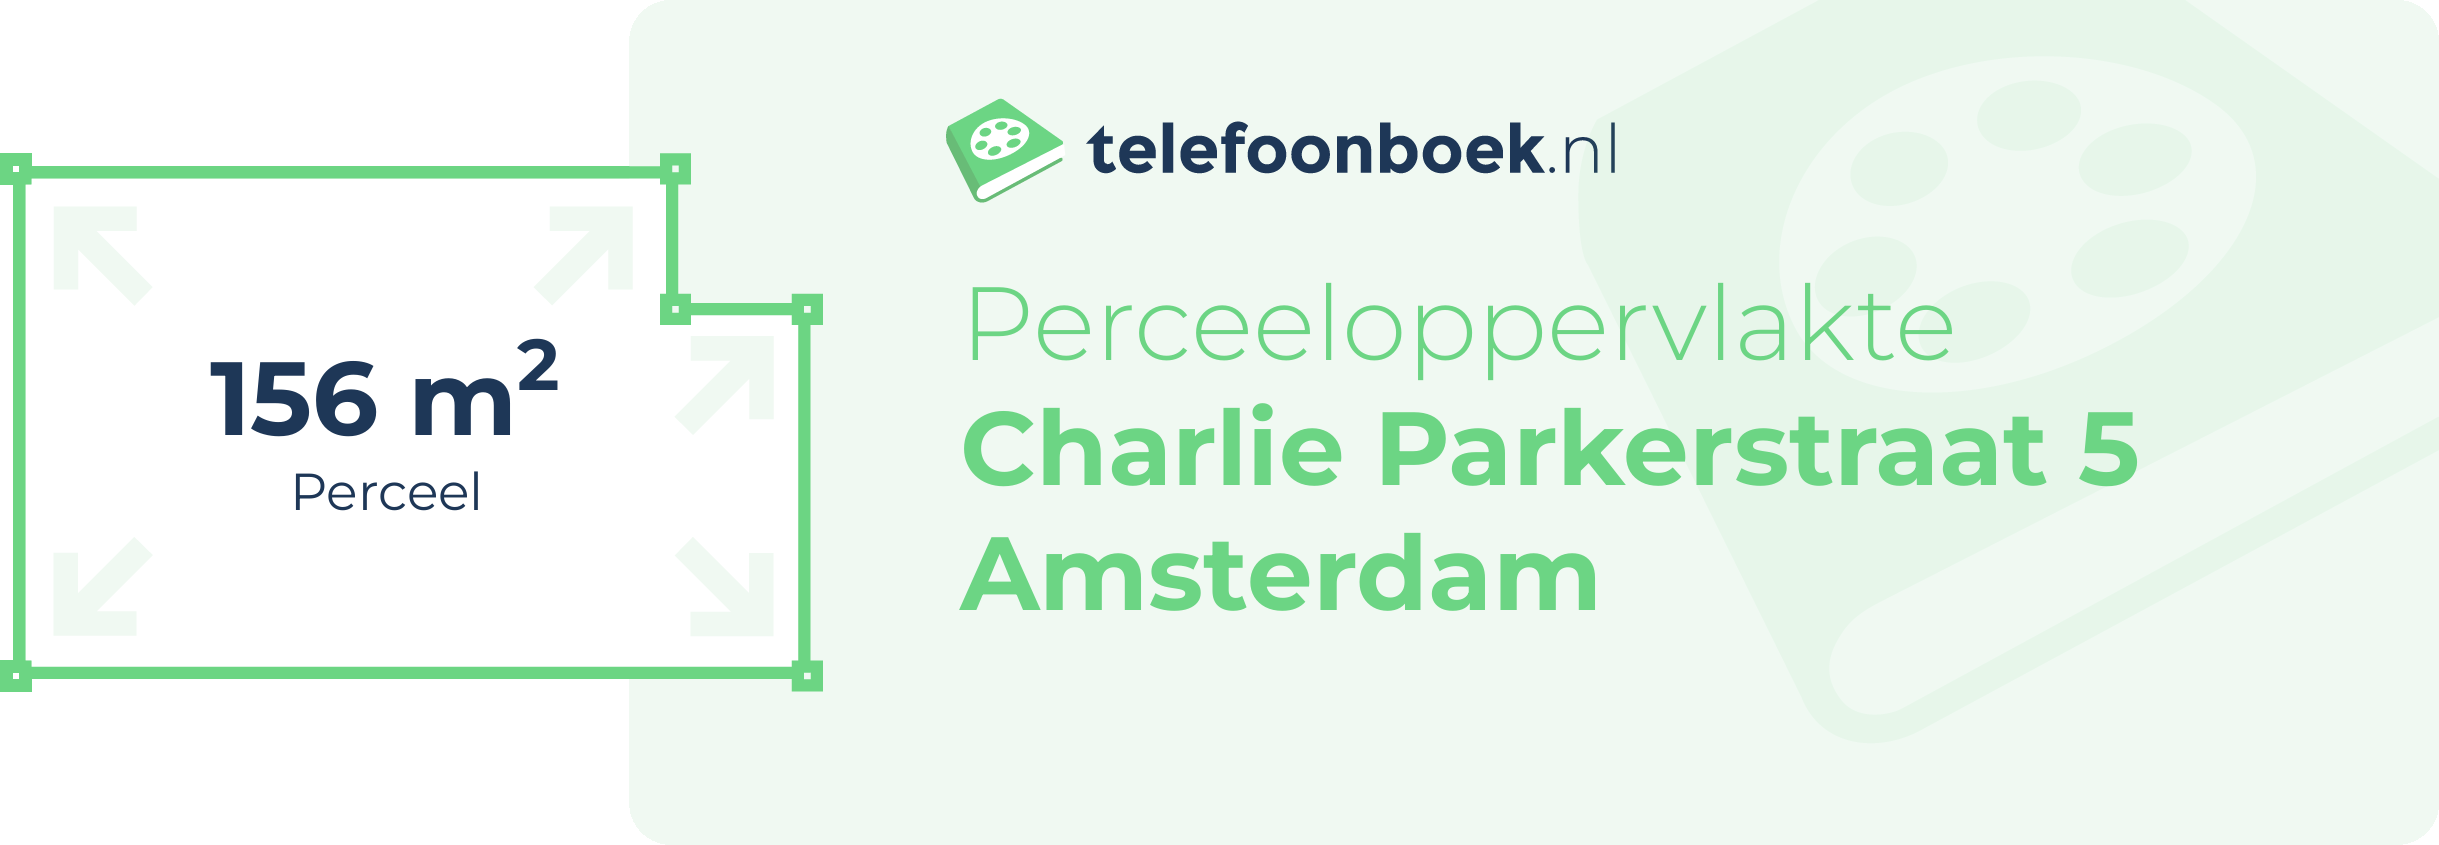 Perceeloppervlakte Charlie Parkerstraat 5 Amsterdam